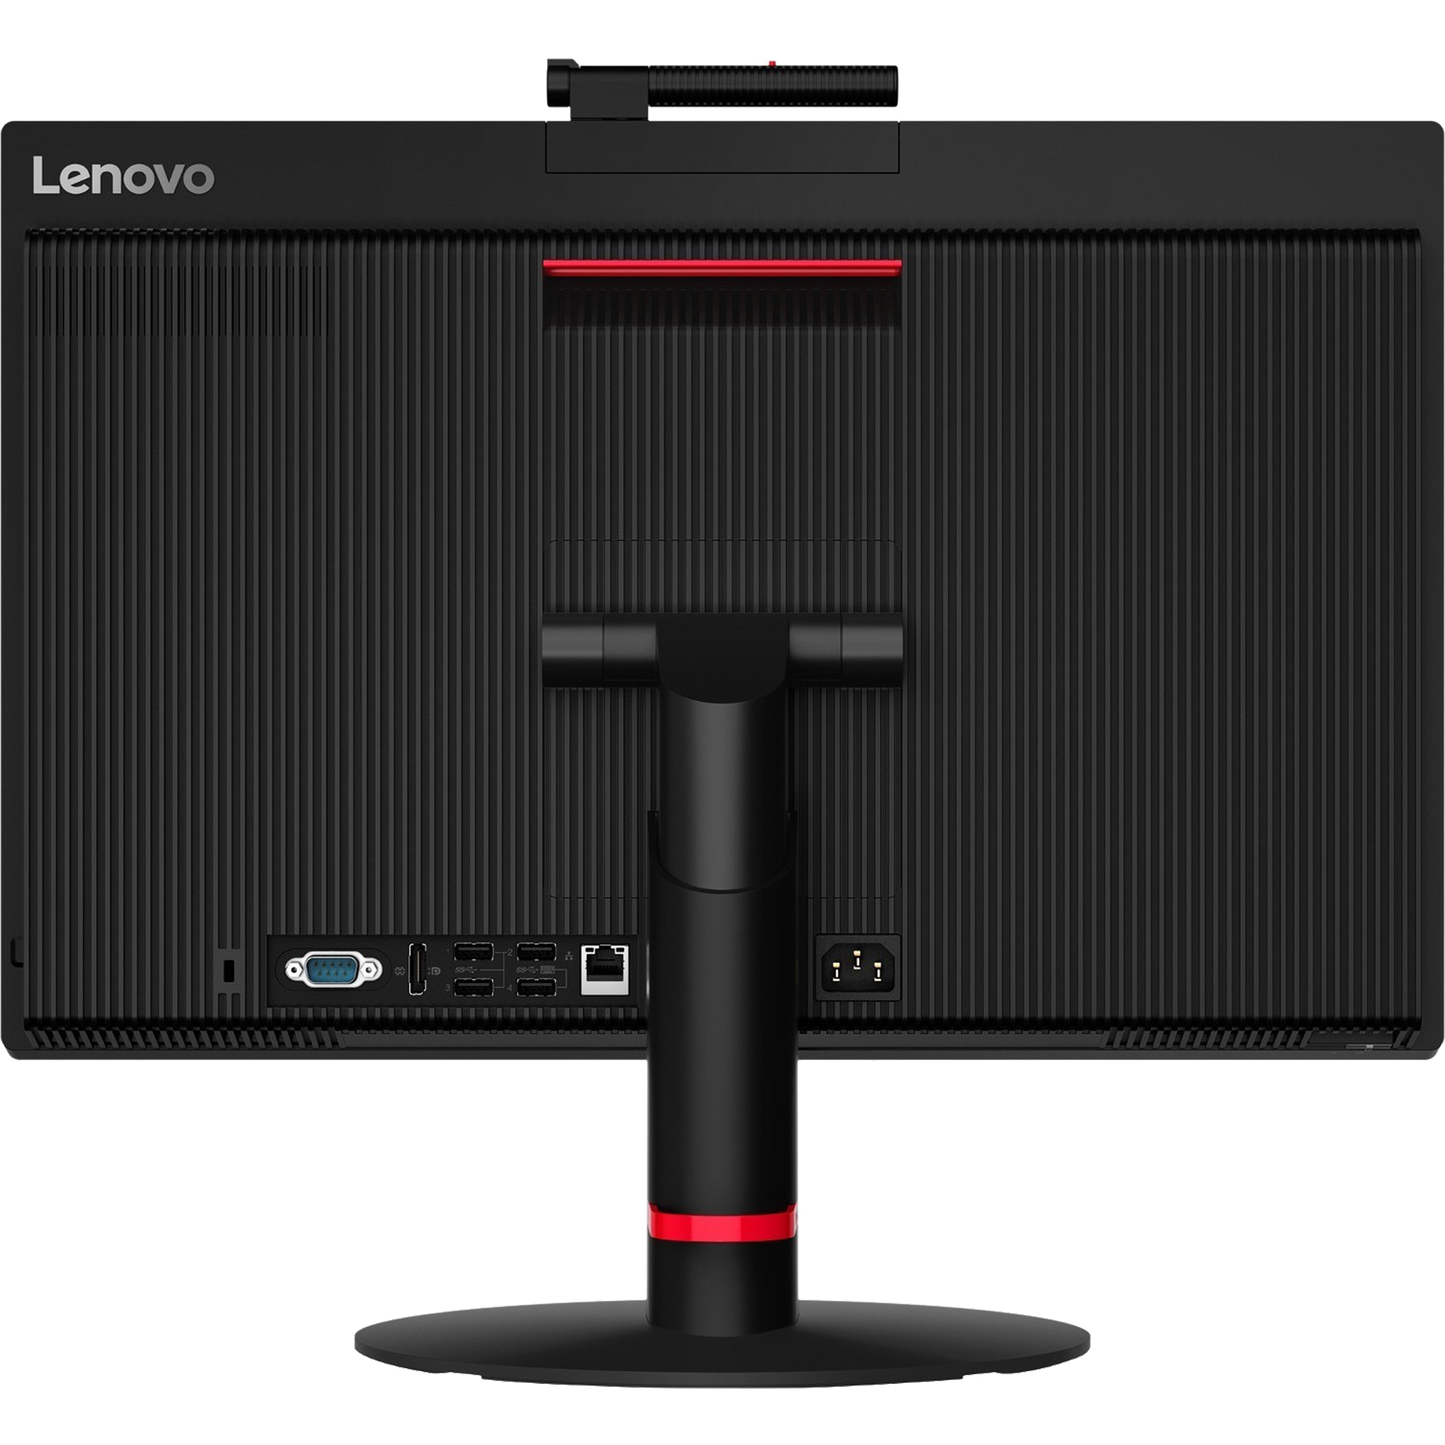 Lenovo ThinkCentre M820z Intel i5, 8th Gen 21.5" All-in-One Desktop PC